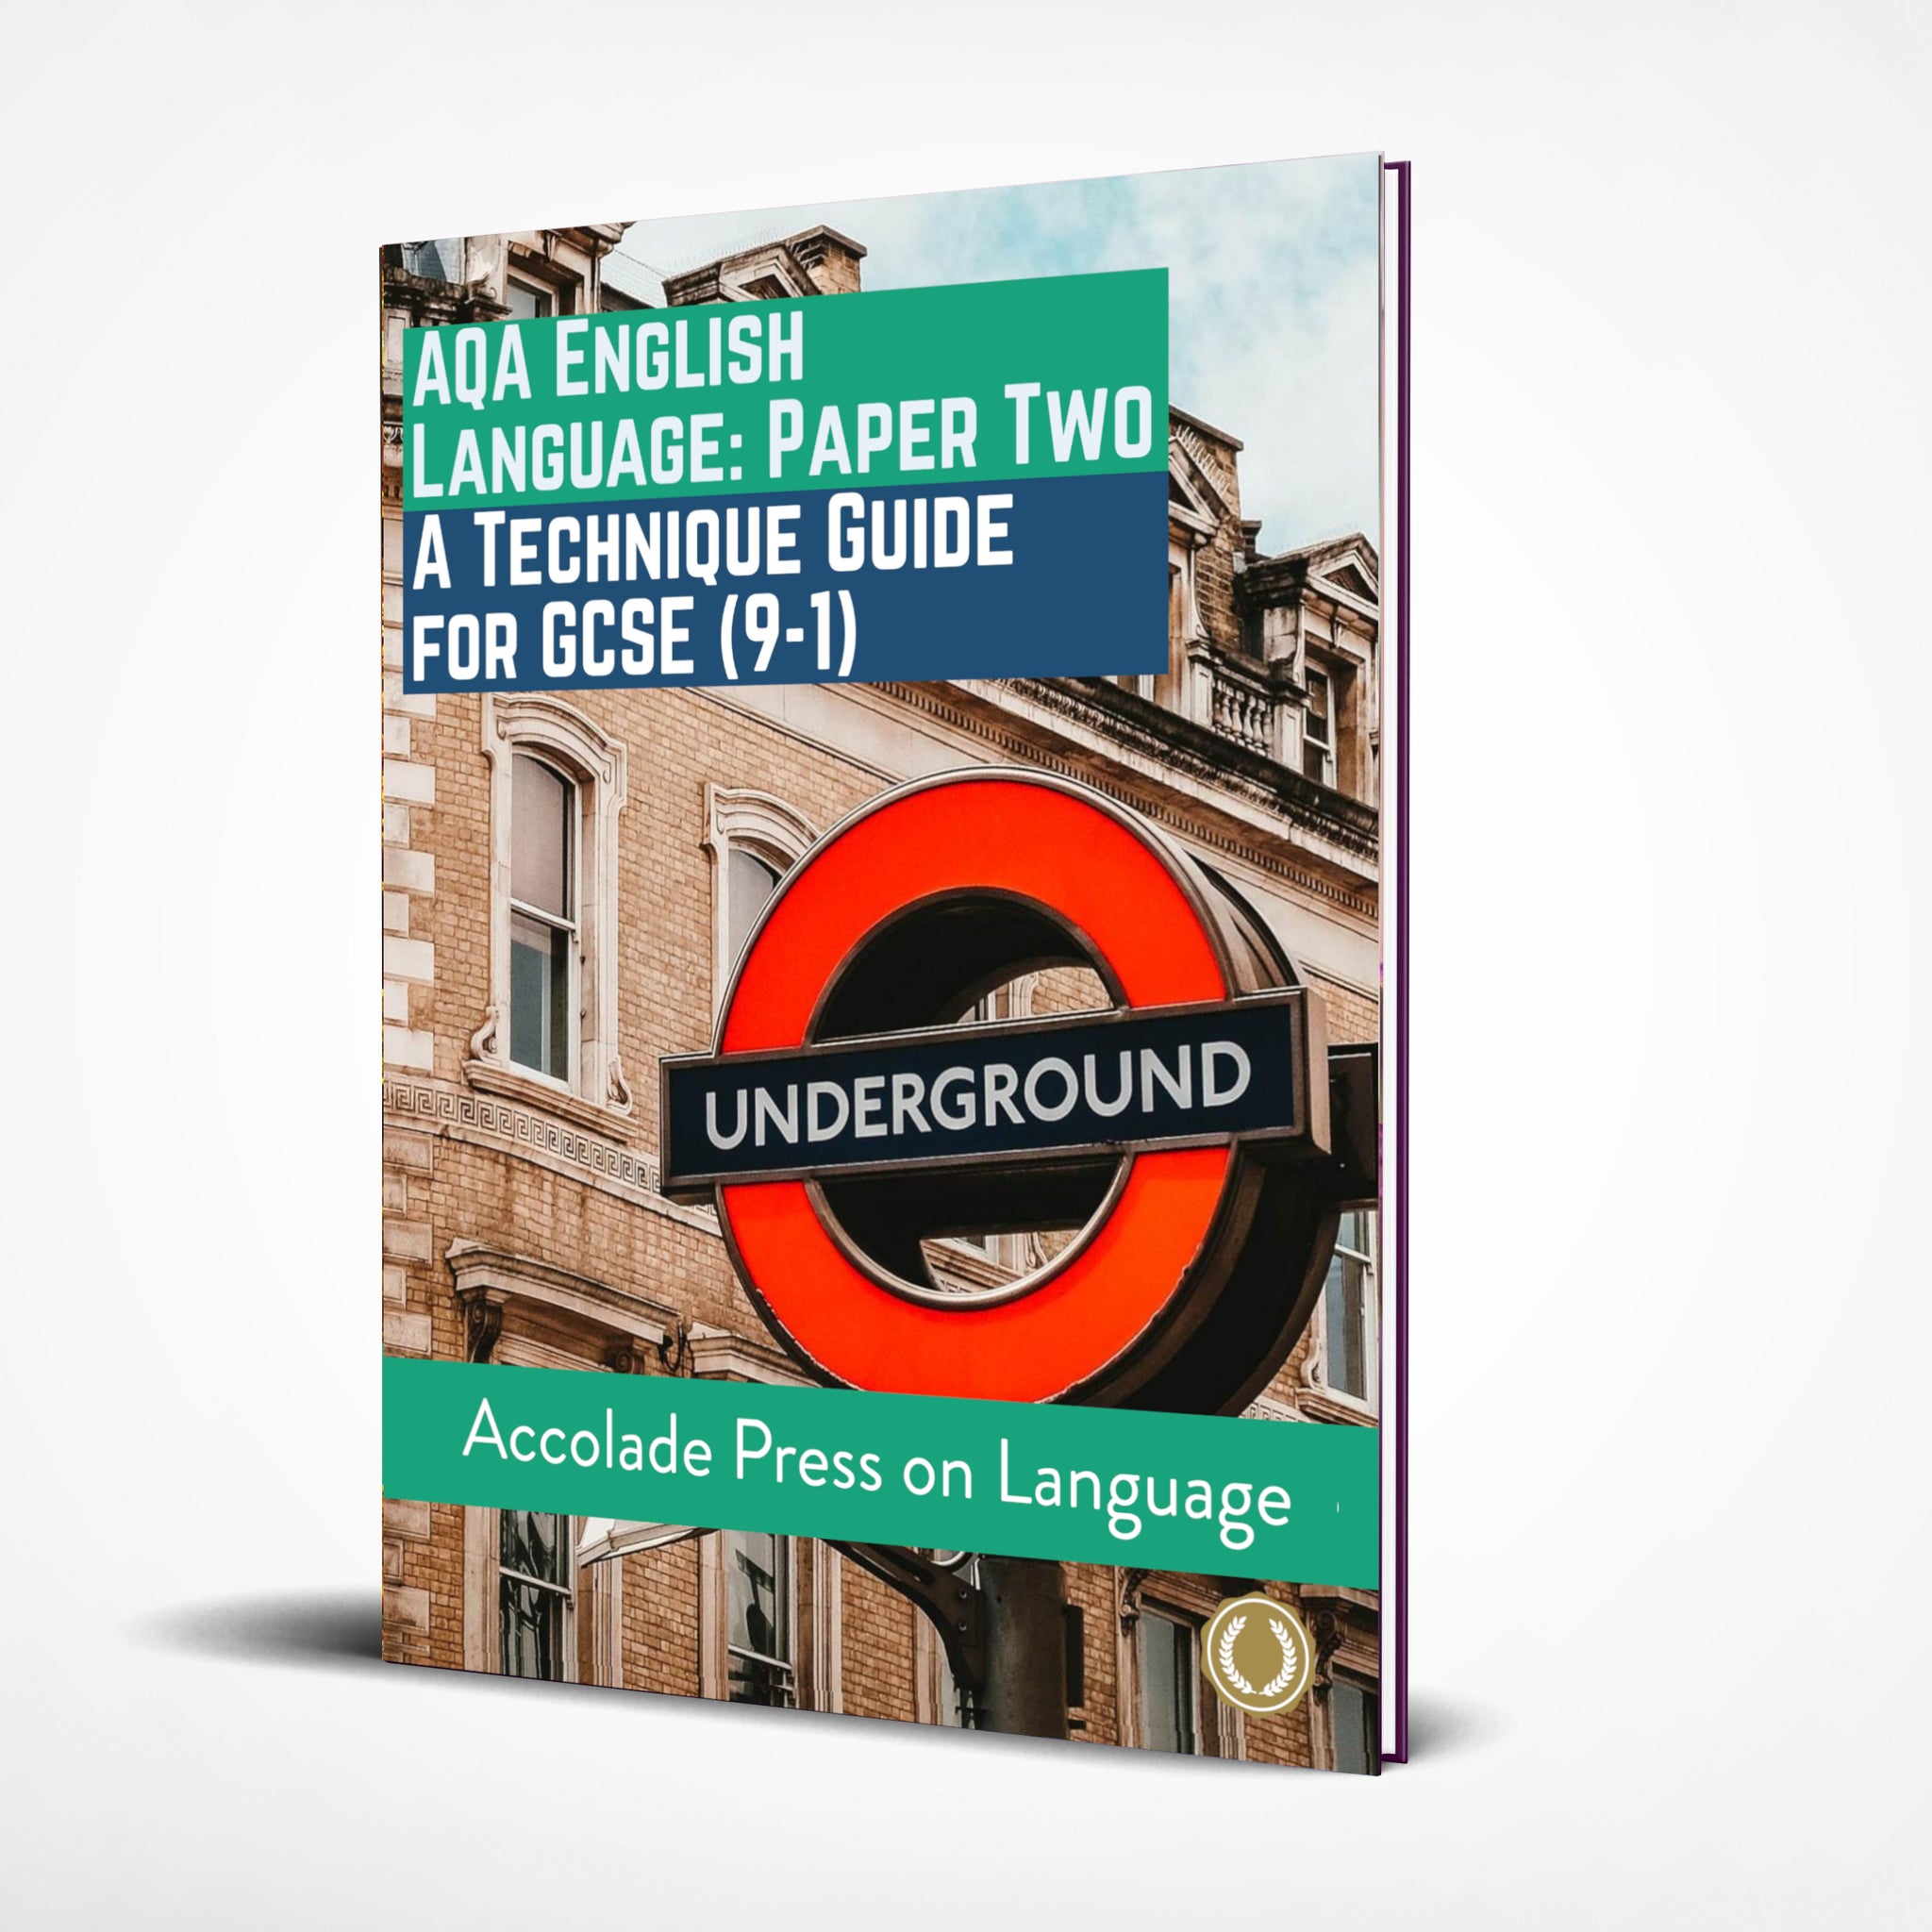 English Language Paper Two: A Technique Guide for GCSE (9-1)